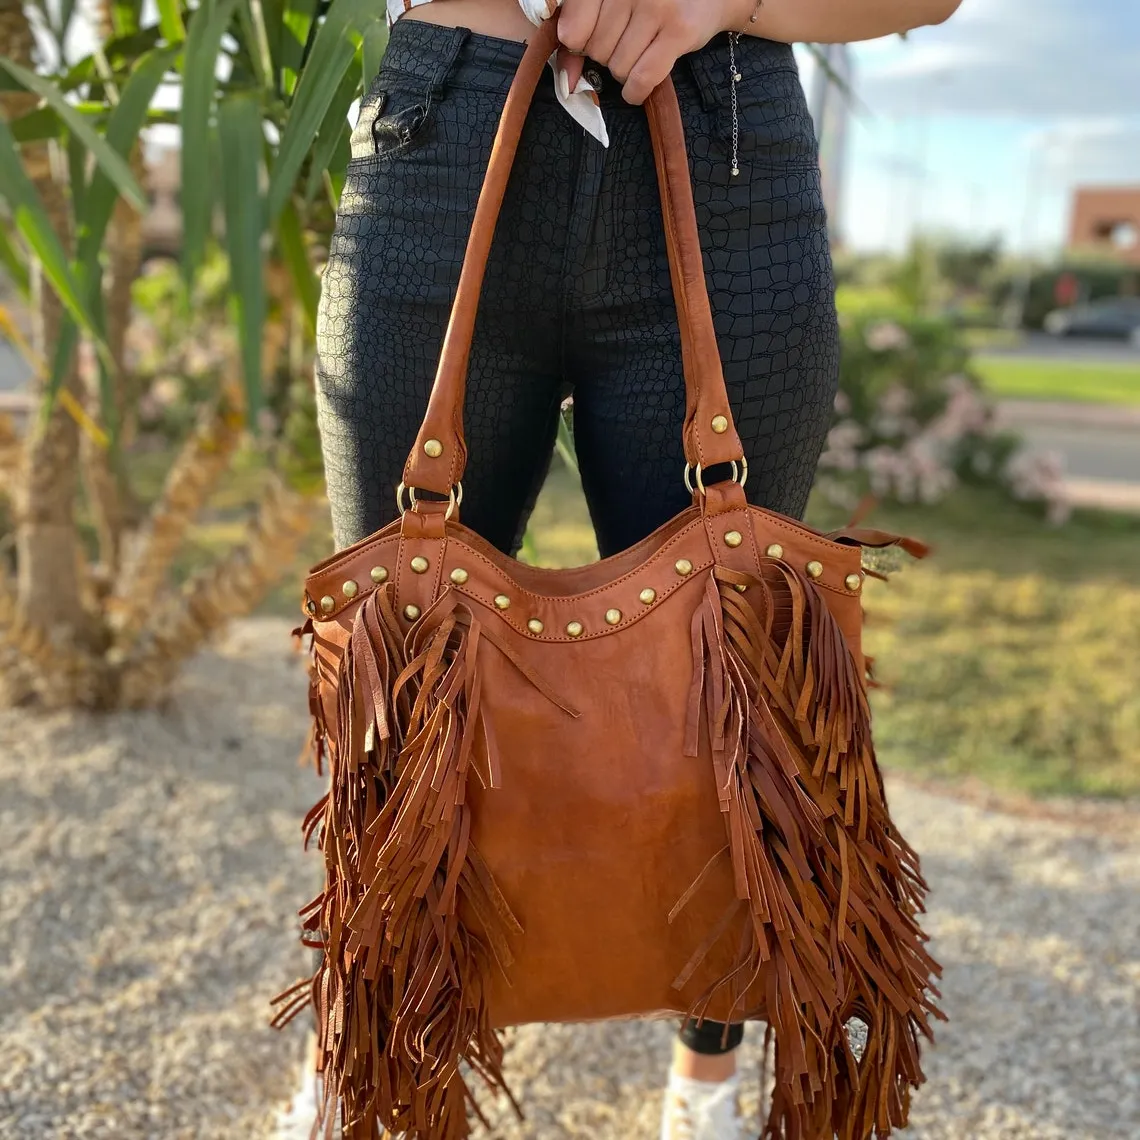 Handwoven bohemian western style fringe purse Boho tote bag Brown soft leather fringe purse Handbag with tassels fringe